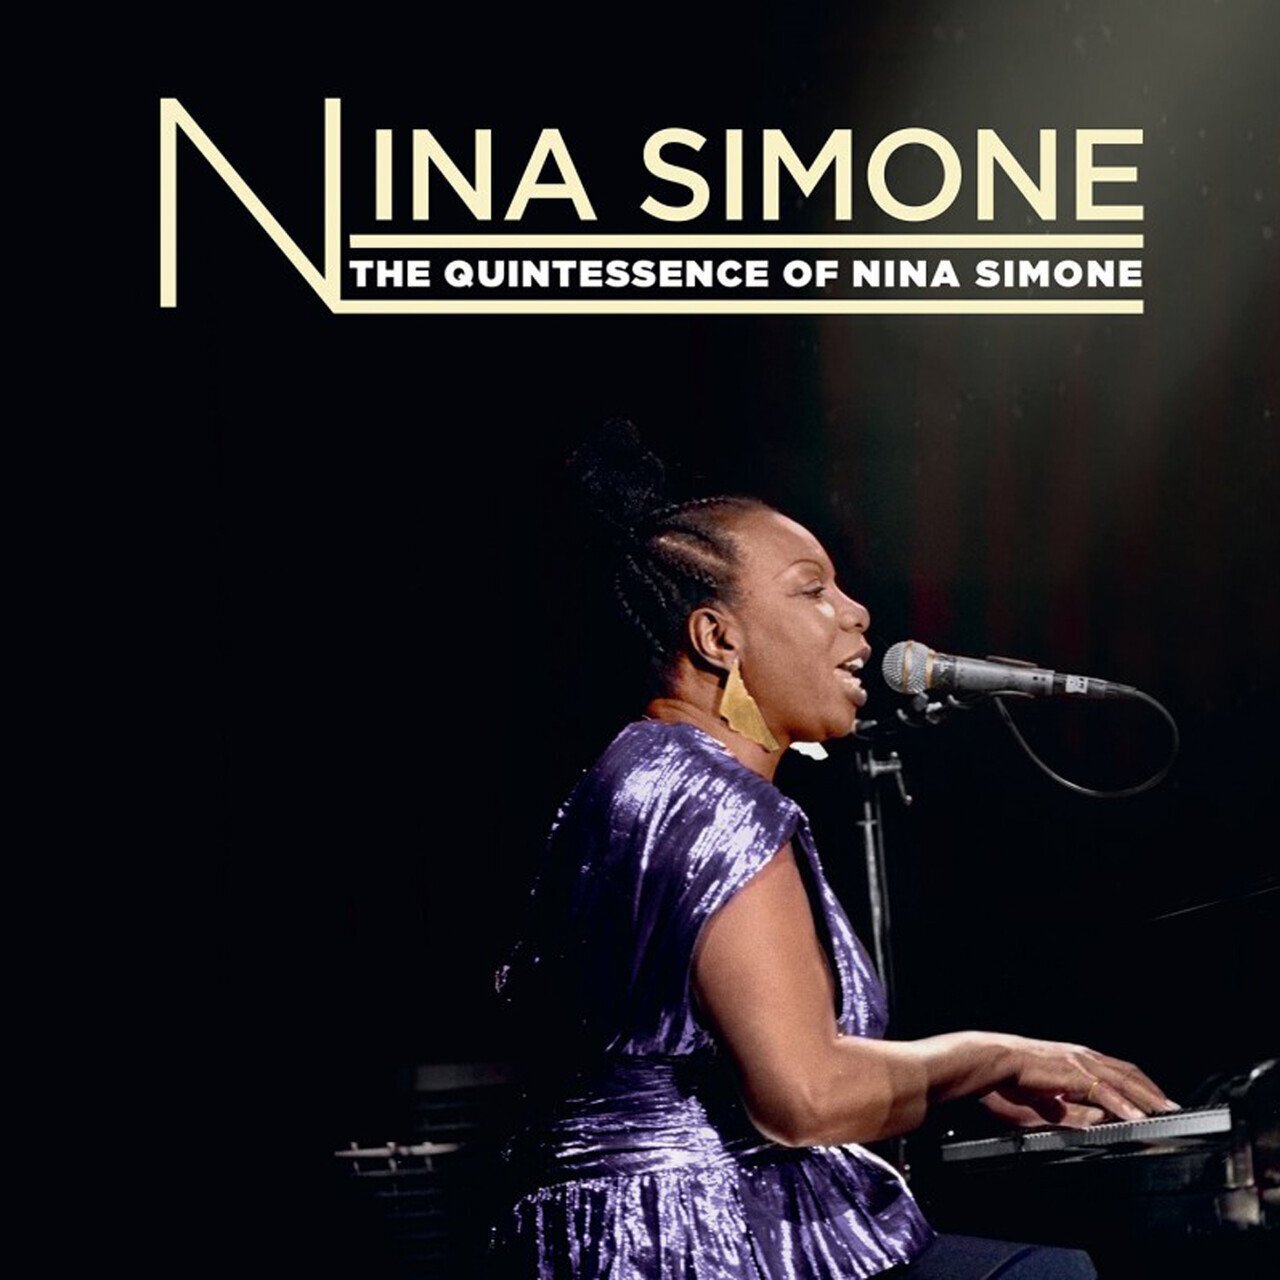 The Quintessence of Nina Simone